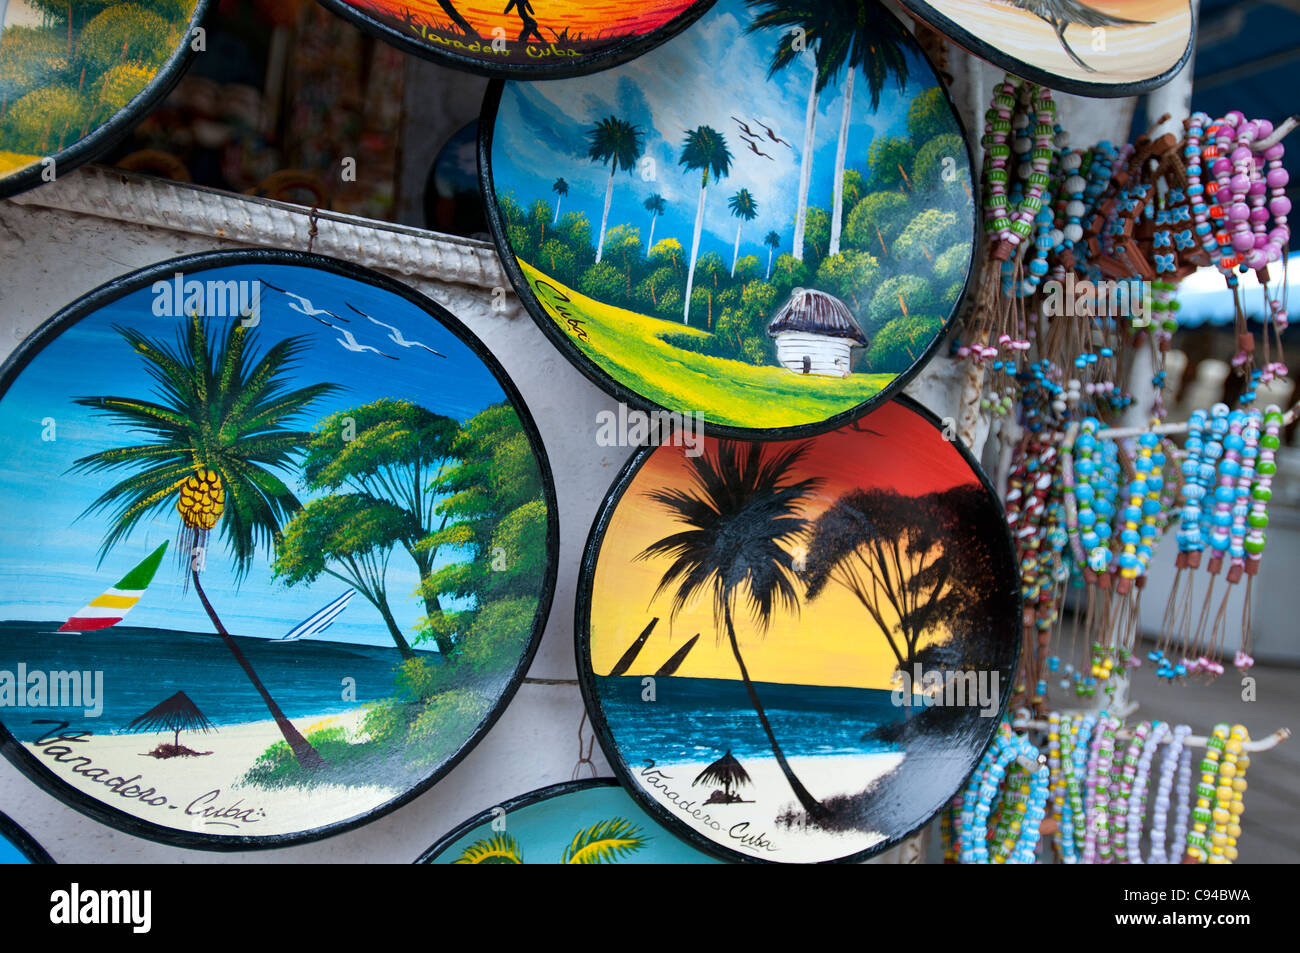 Souvenir plates on sale in market, Varadero, Cuba Stock Photo